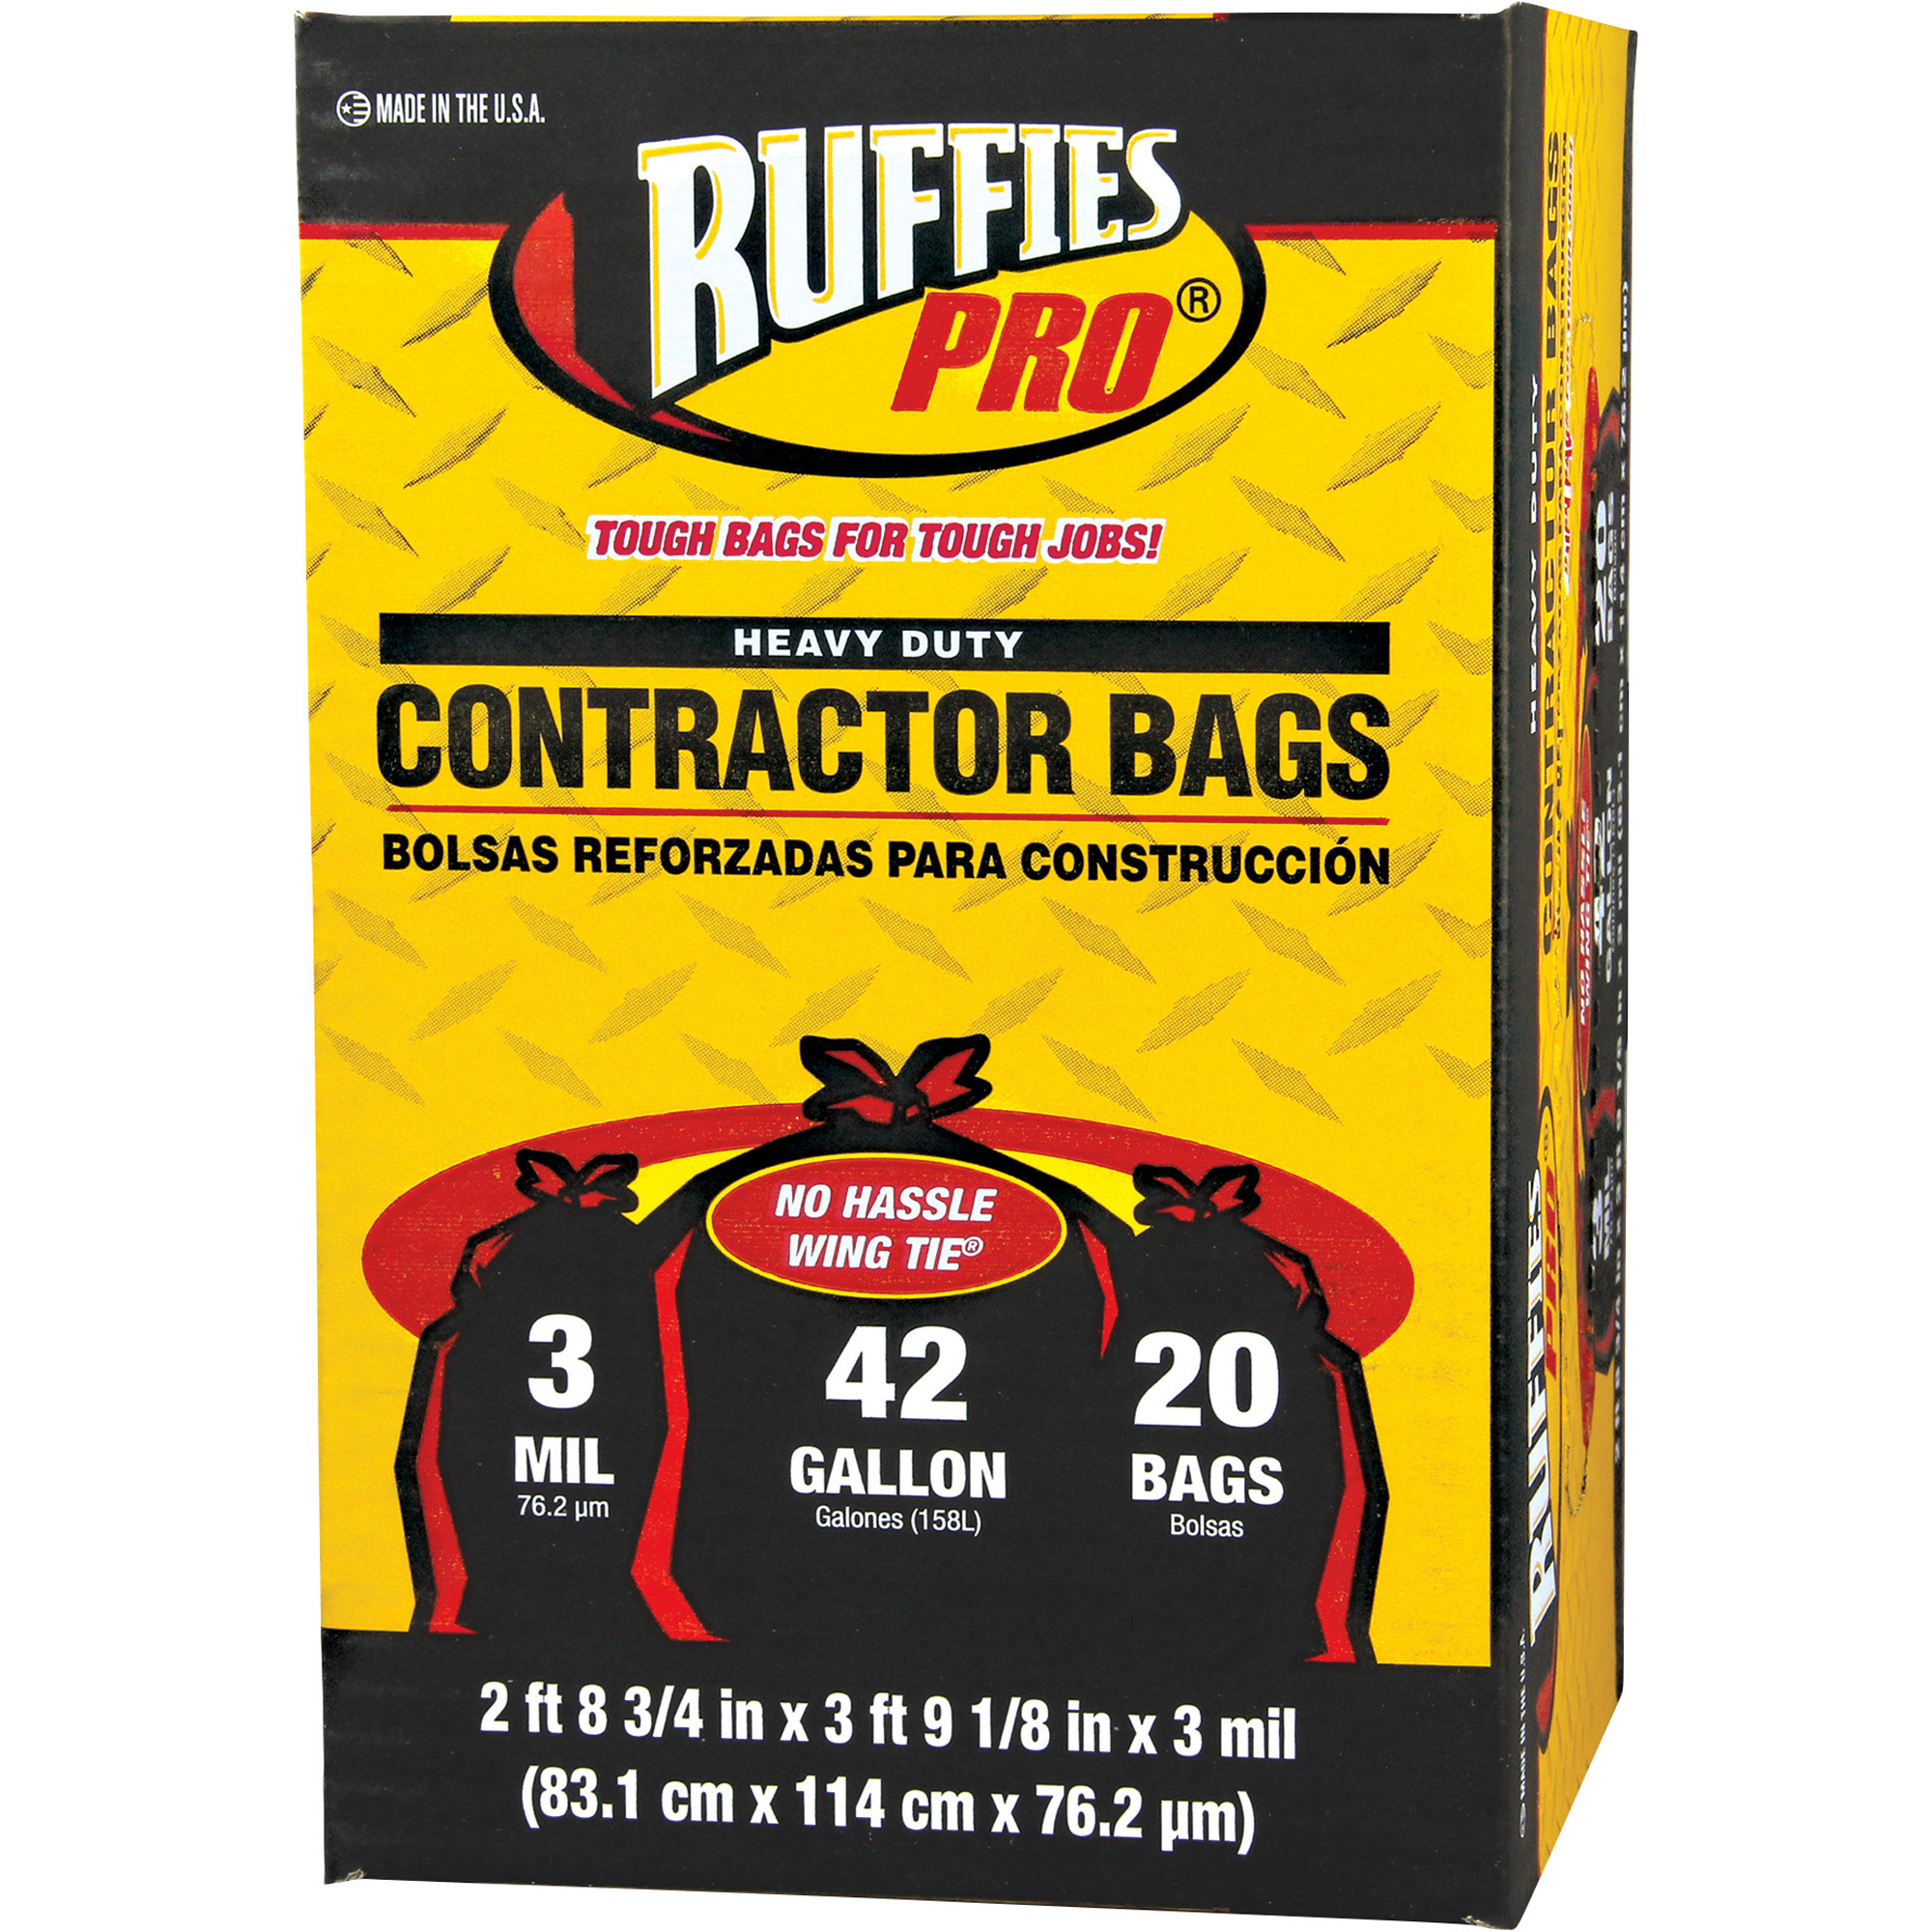 42 Gallon Contractor Trash Bags 20 Count